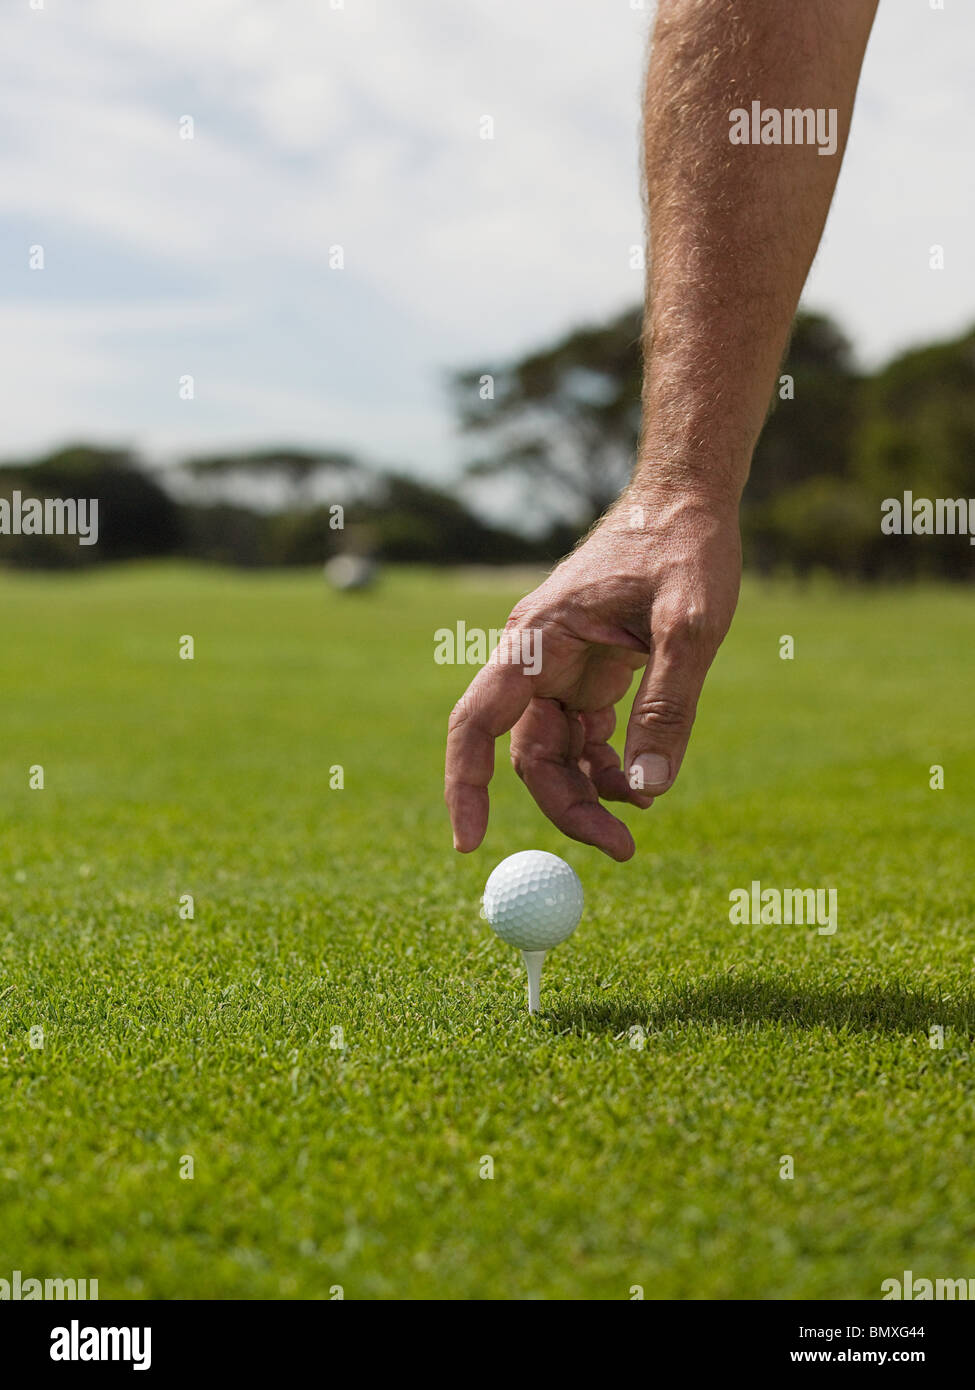 Man playing golf, picking up ball Stock Photo - Alamy